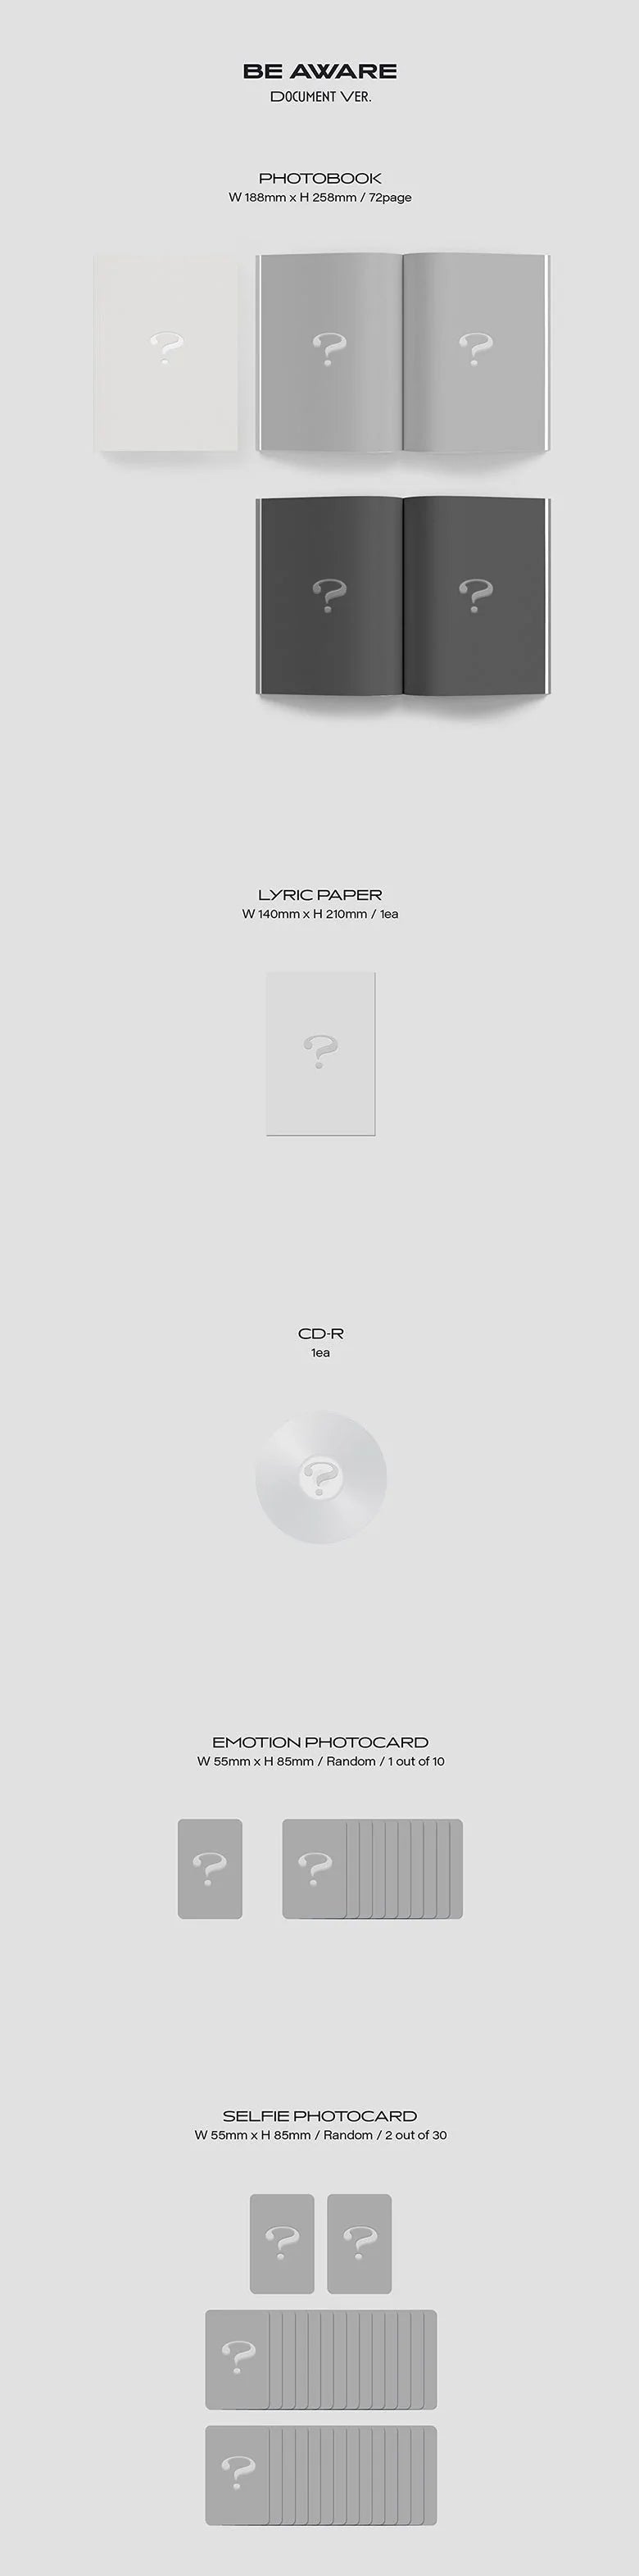 THE BOYZ 더보이즈 - 7th Mini-Album 'BE AWARE' (Photobook Version)